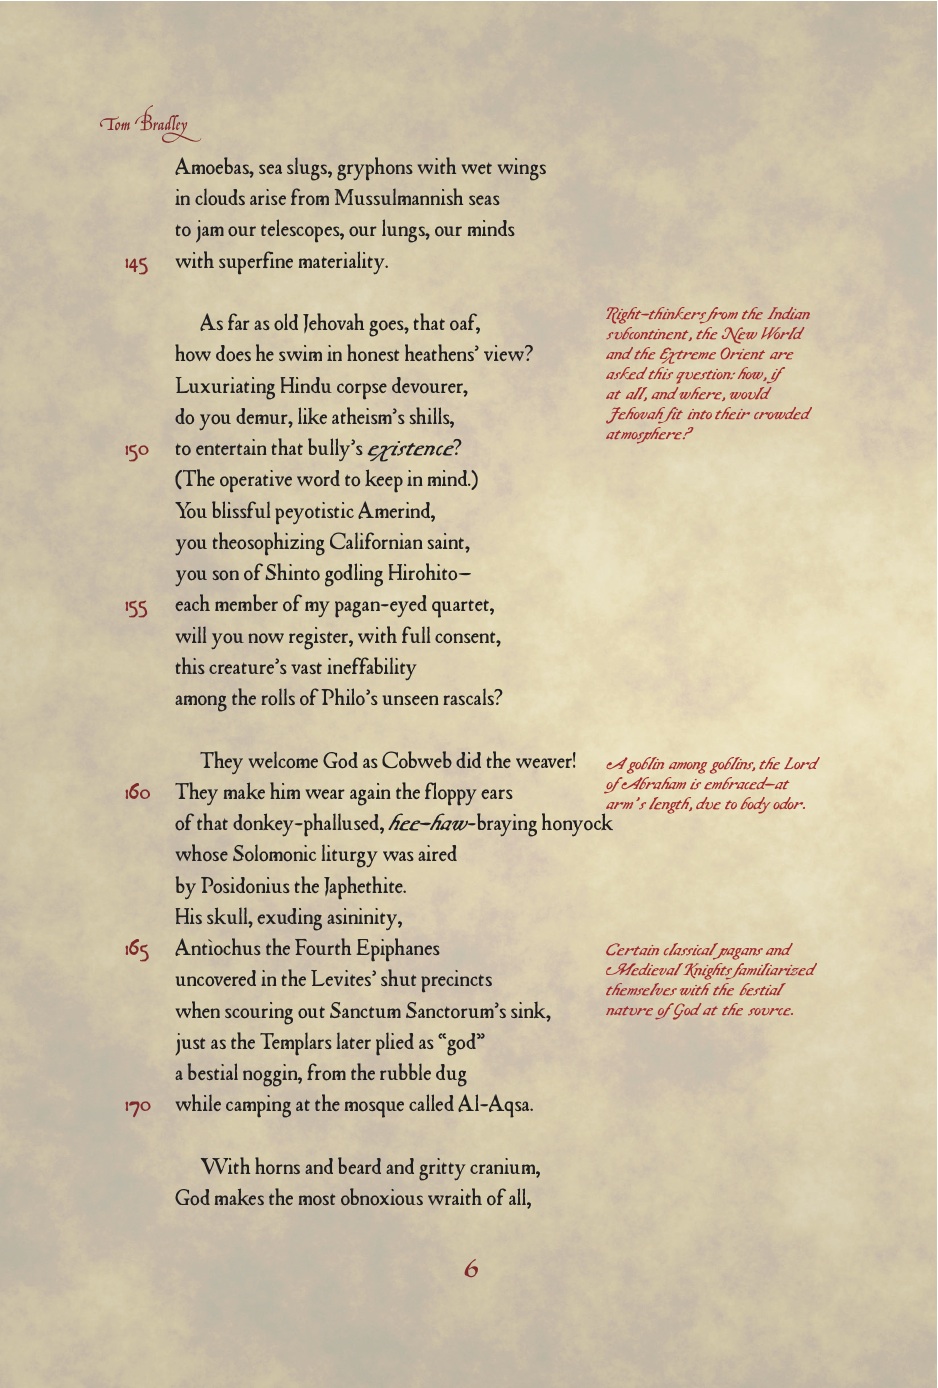 page 6 of Energeticum - Phantasticum, A Profane Epyllion, written in seven cantos by Tom Bradley